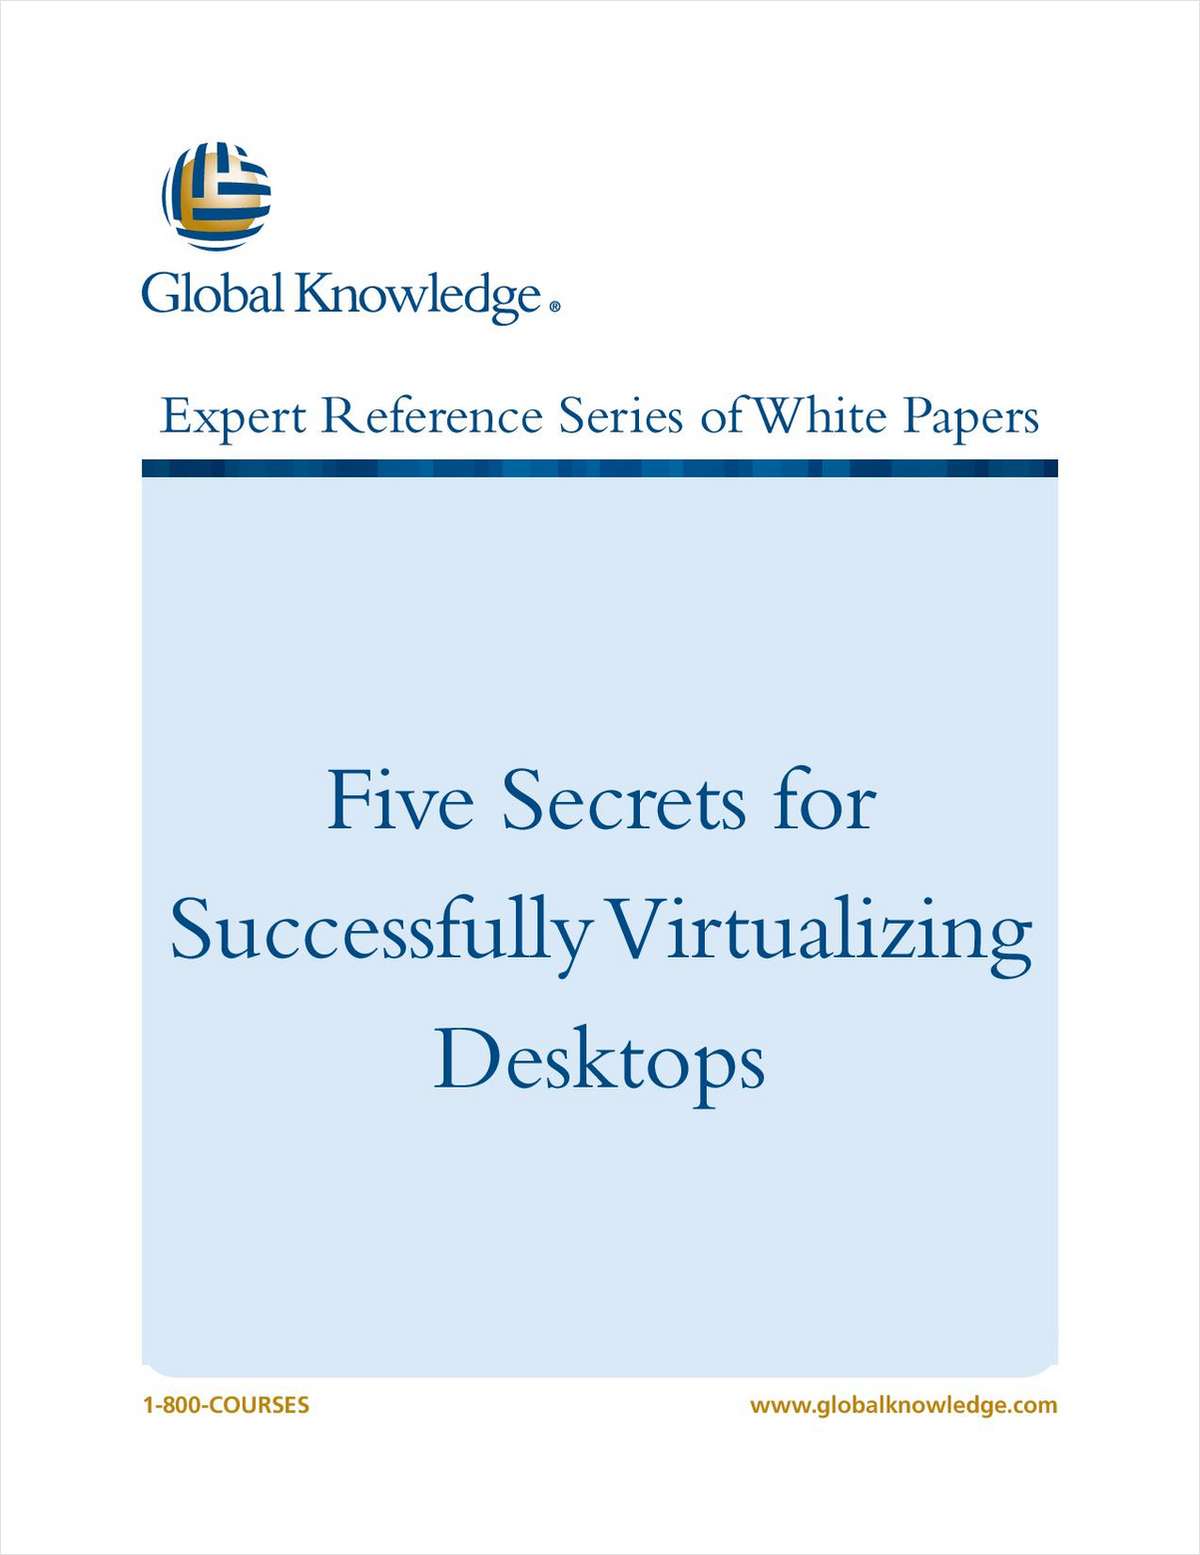 Five Secrets for Successfully Virtualizing Desktops